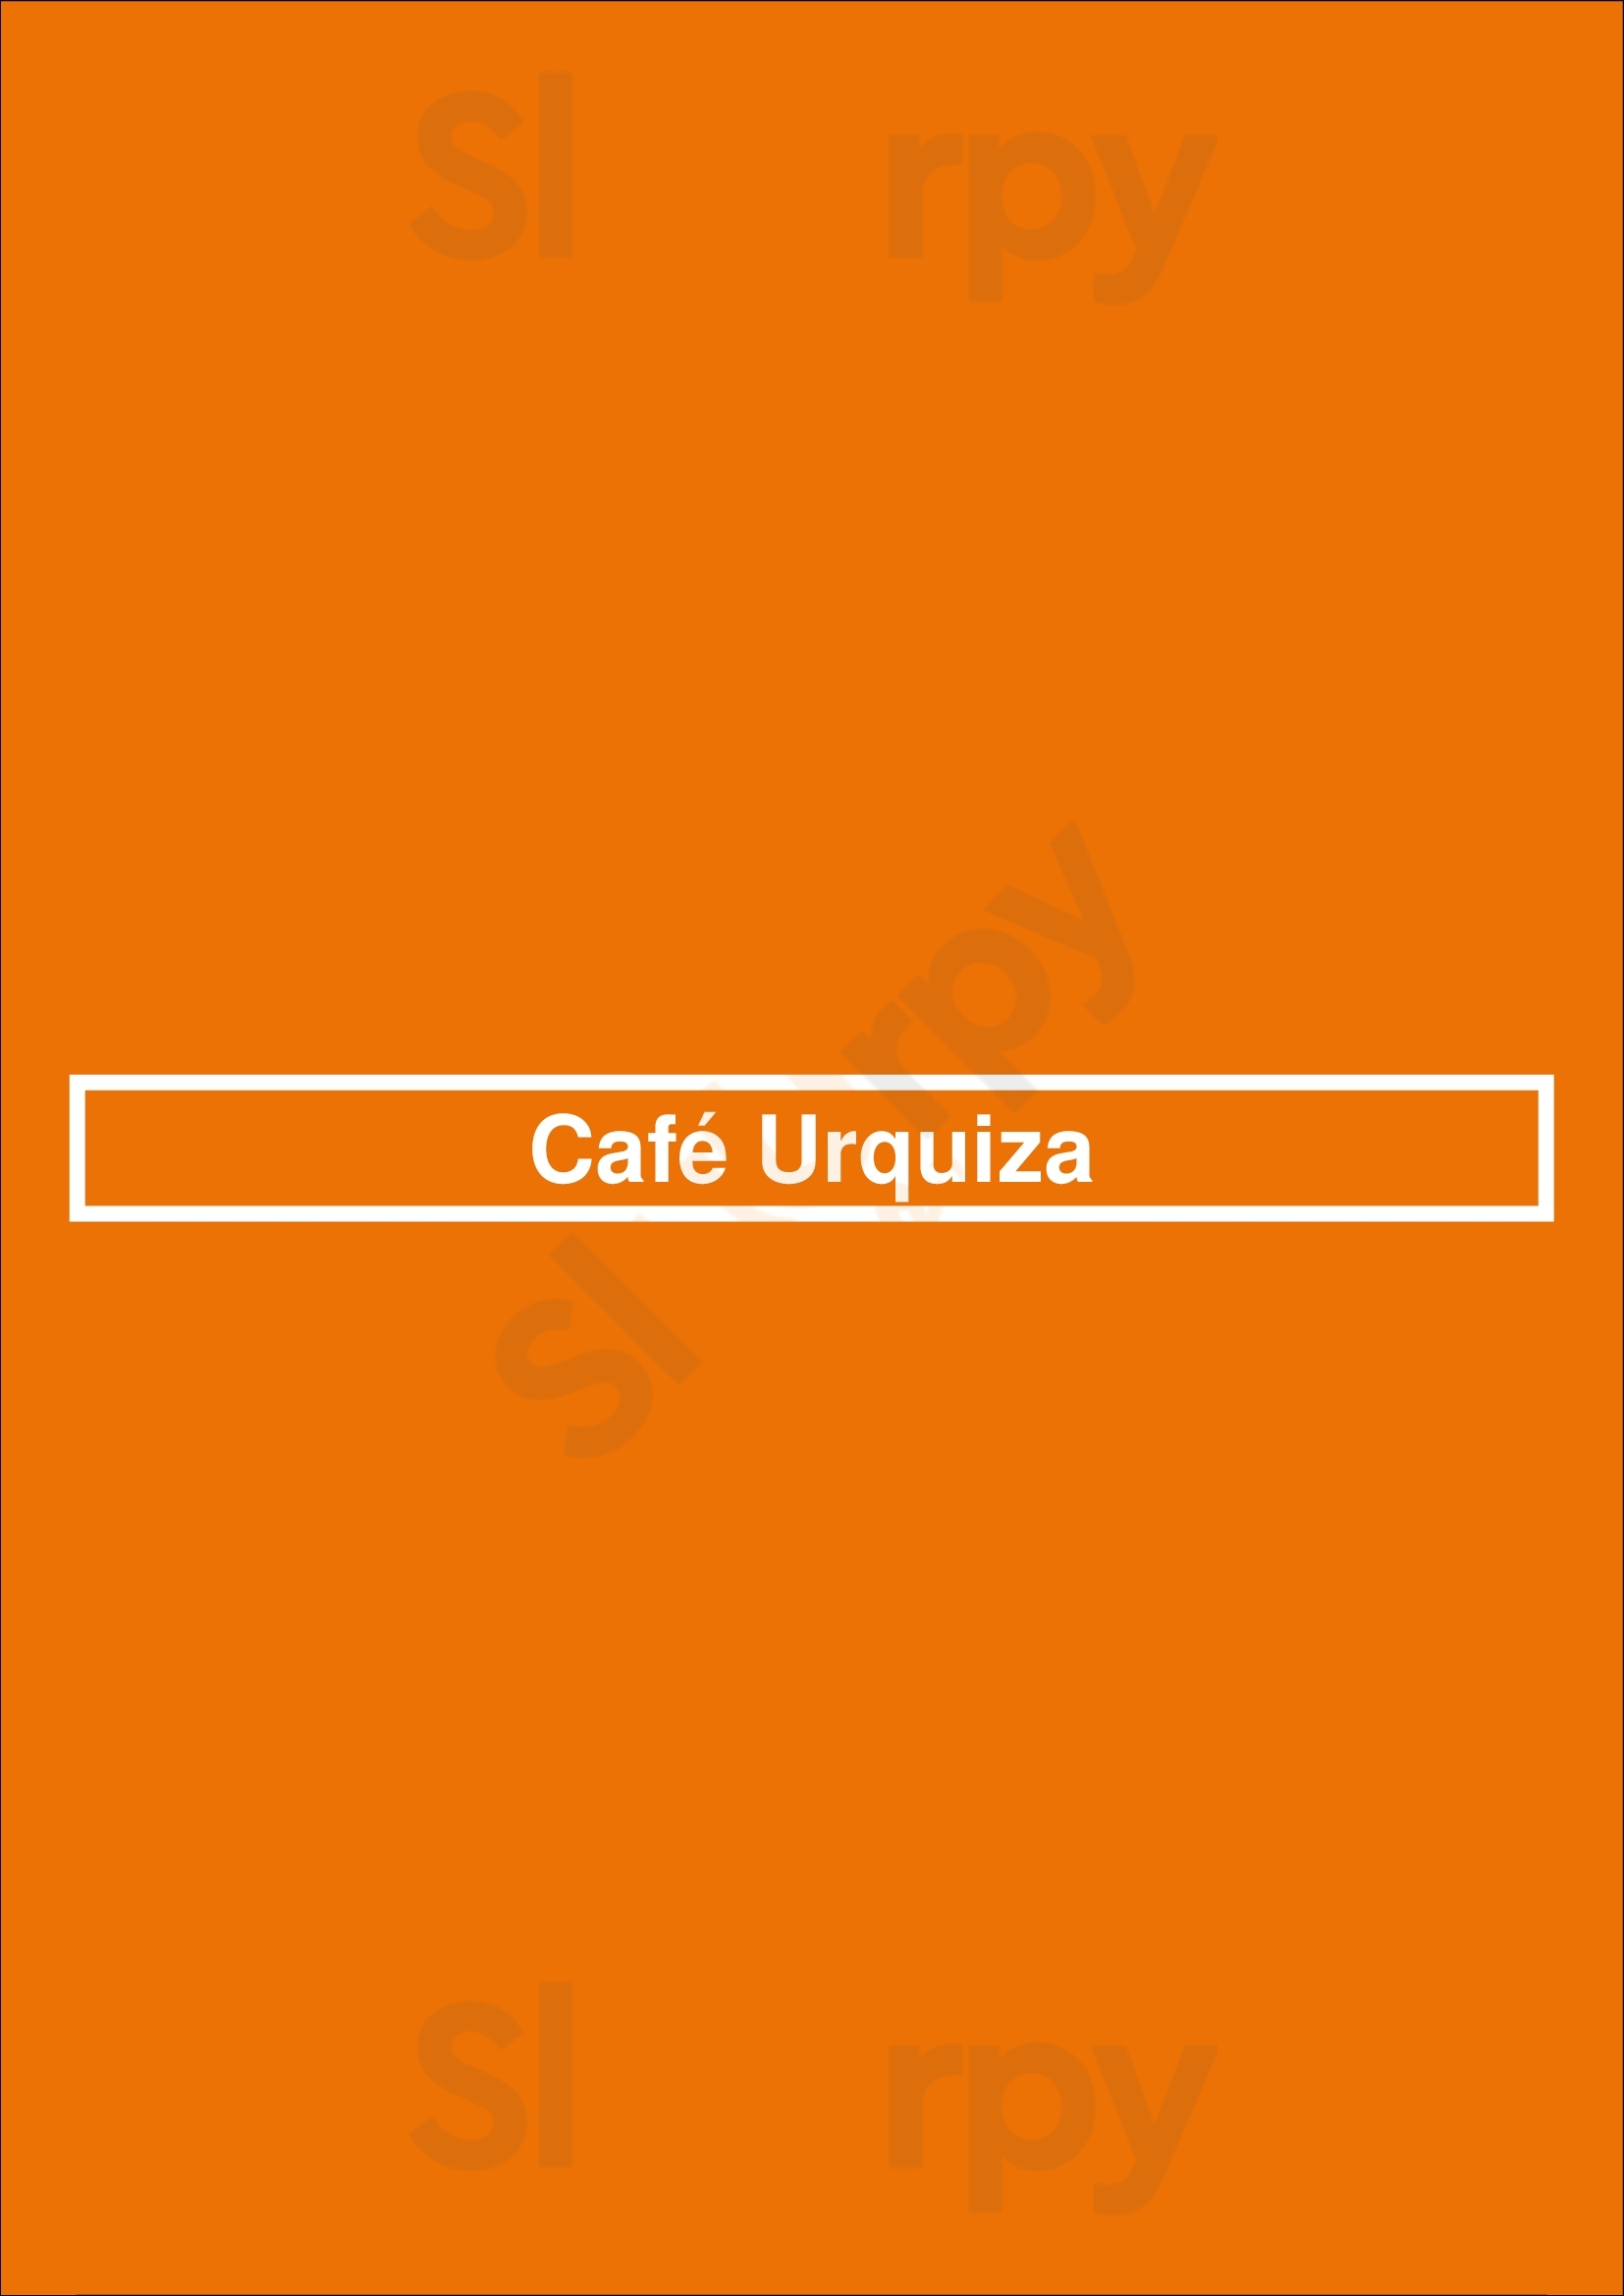 Café Urquiza La Plata Menu - 1